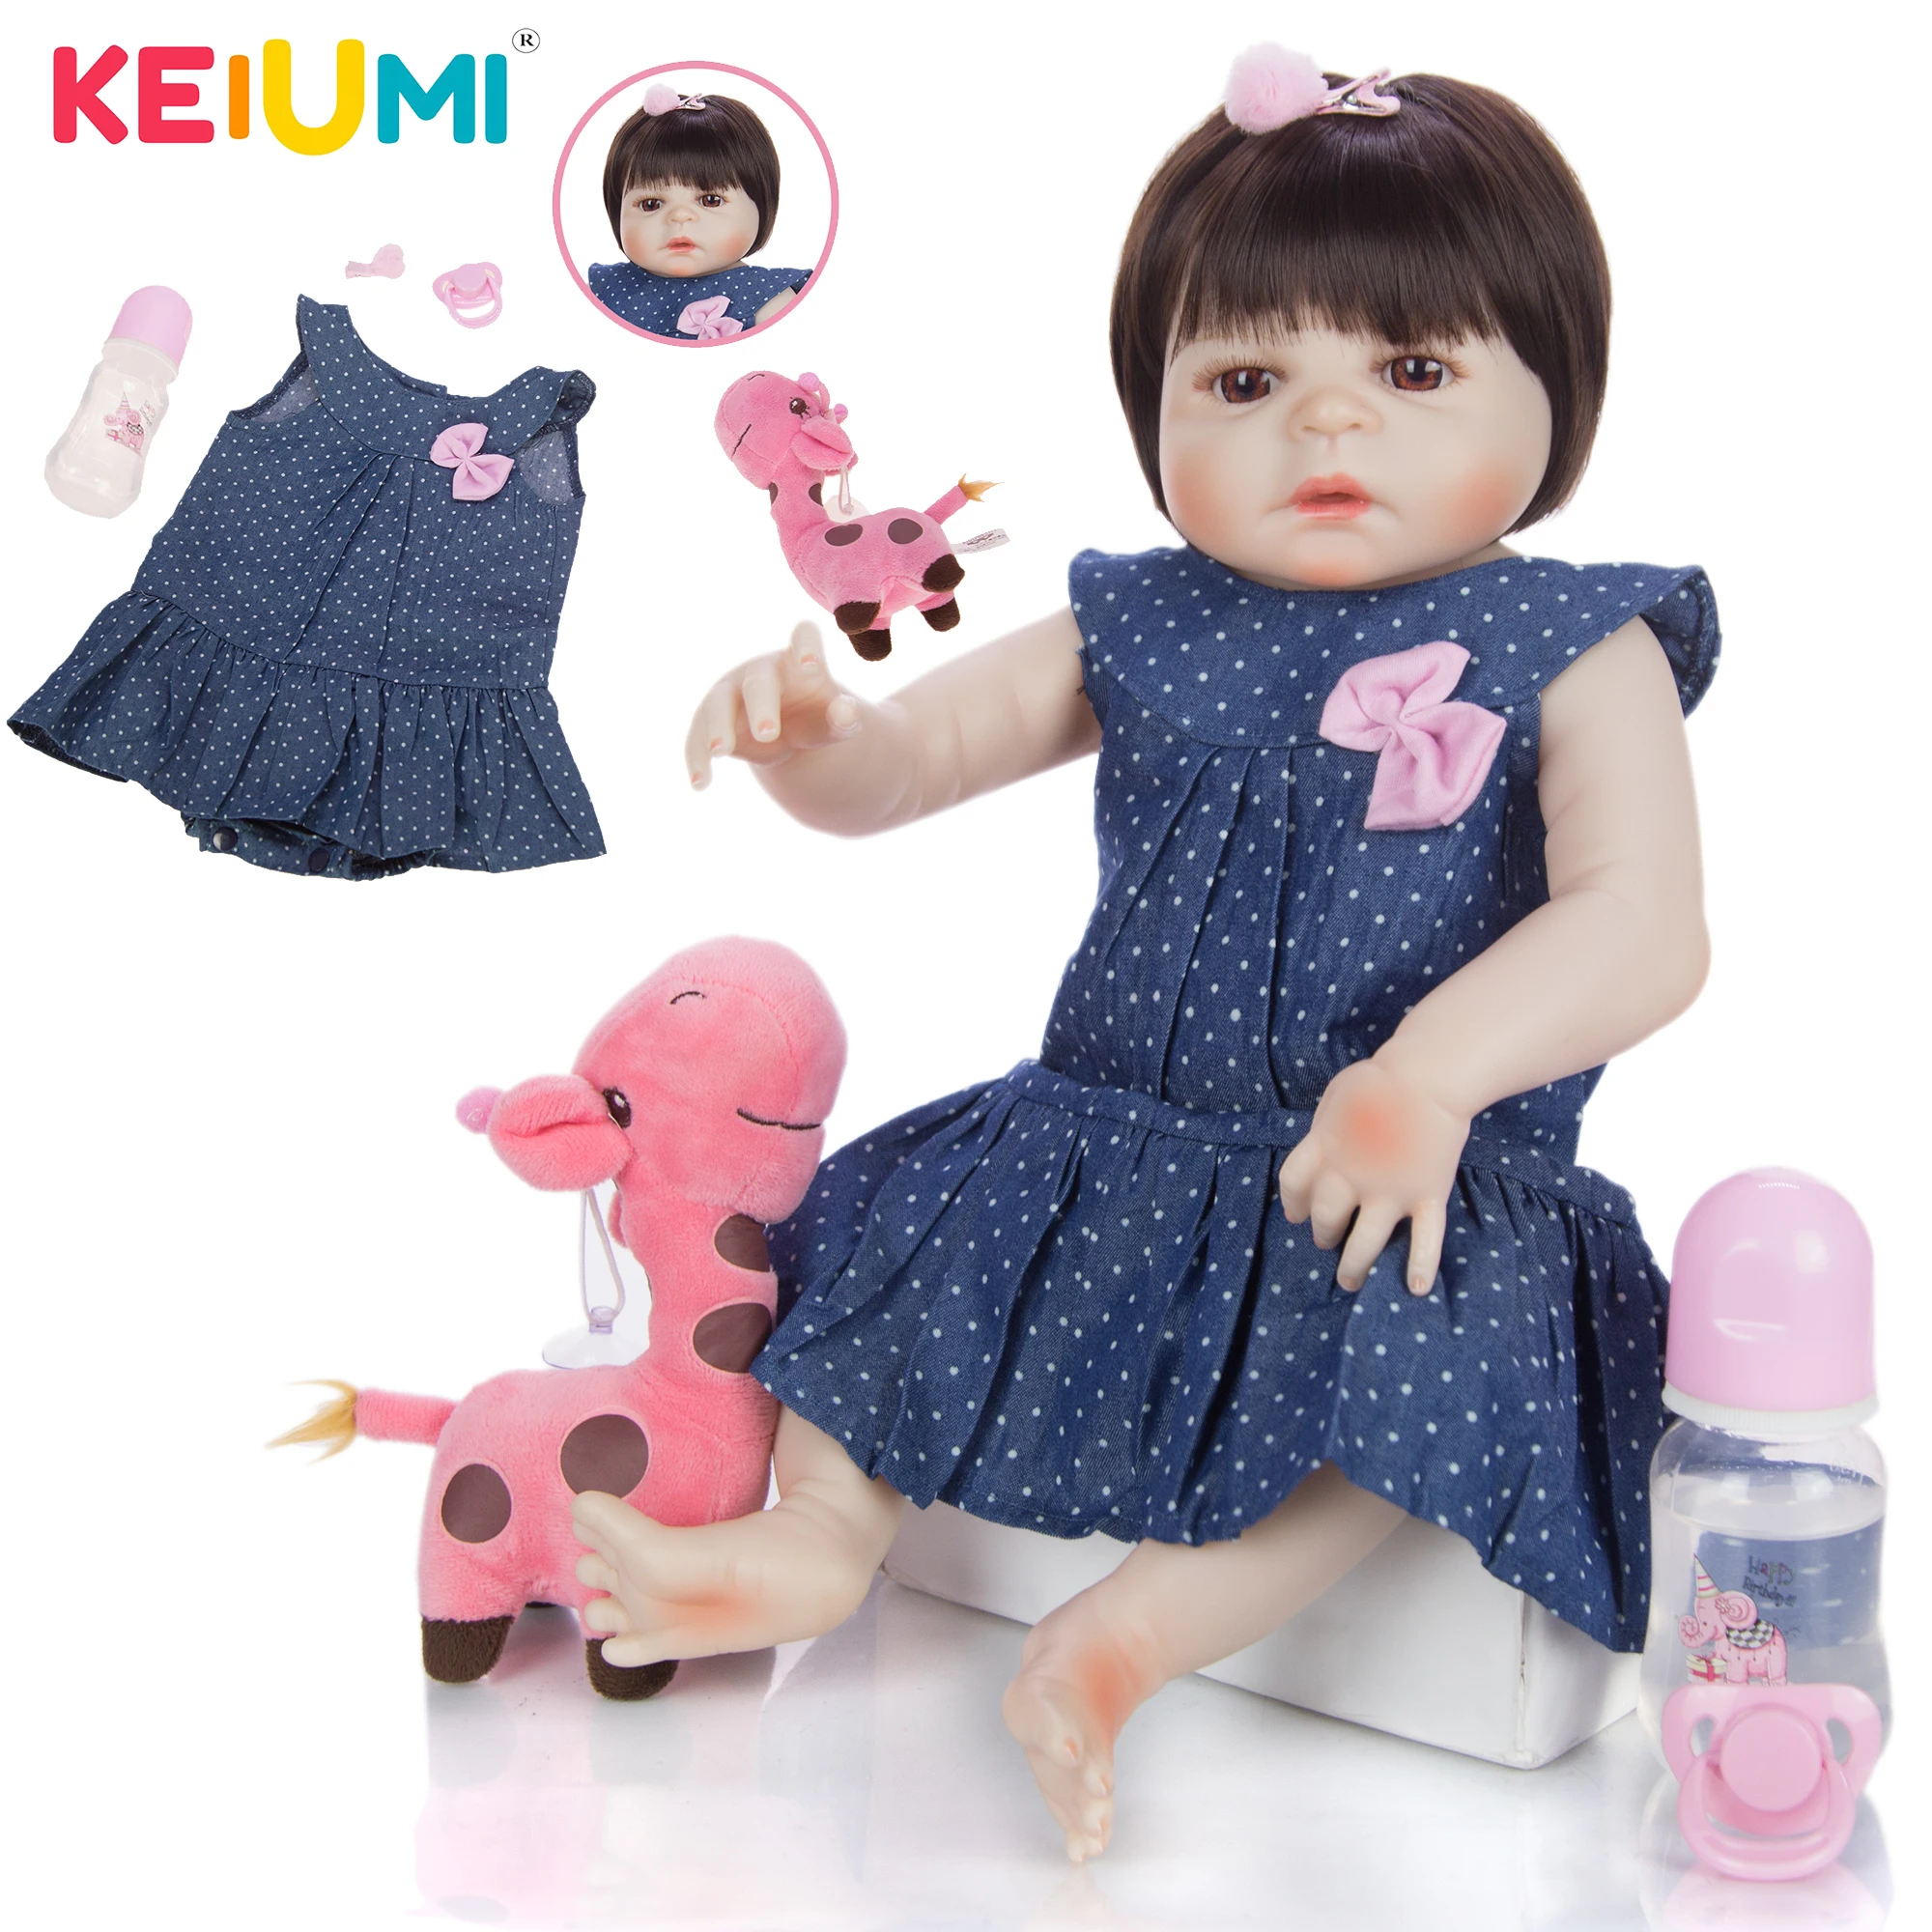 

KEIUMI 49 CM Silicone Reborn Baby Girl Bath Doll Lifelike Toddler Bebe Newborn Boneca Toy For Children Juguetes Bonecas Gifts